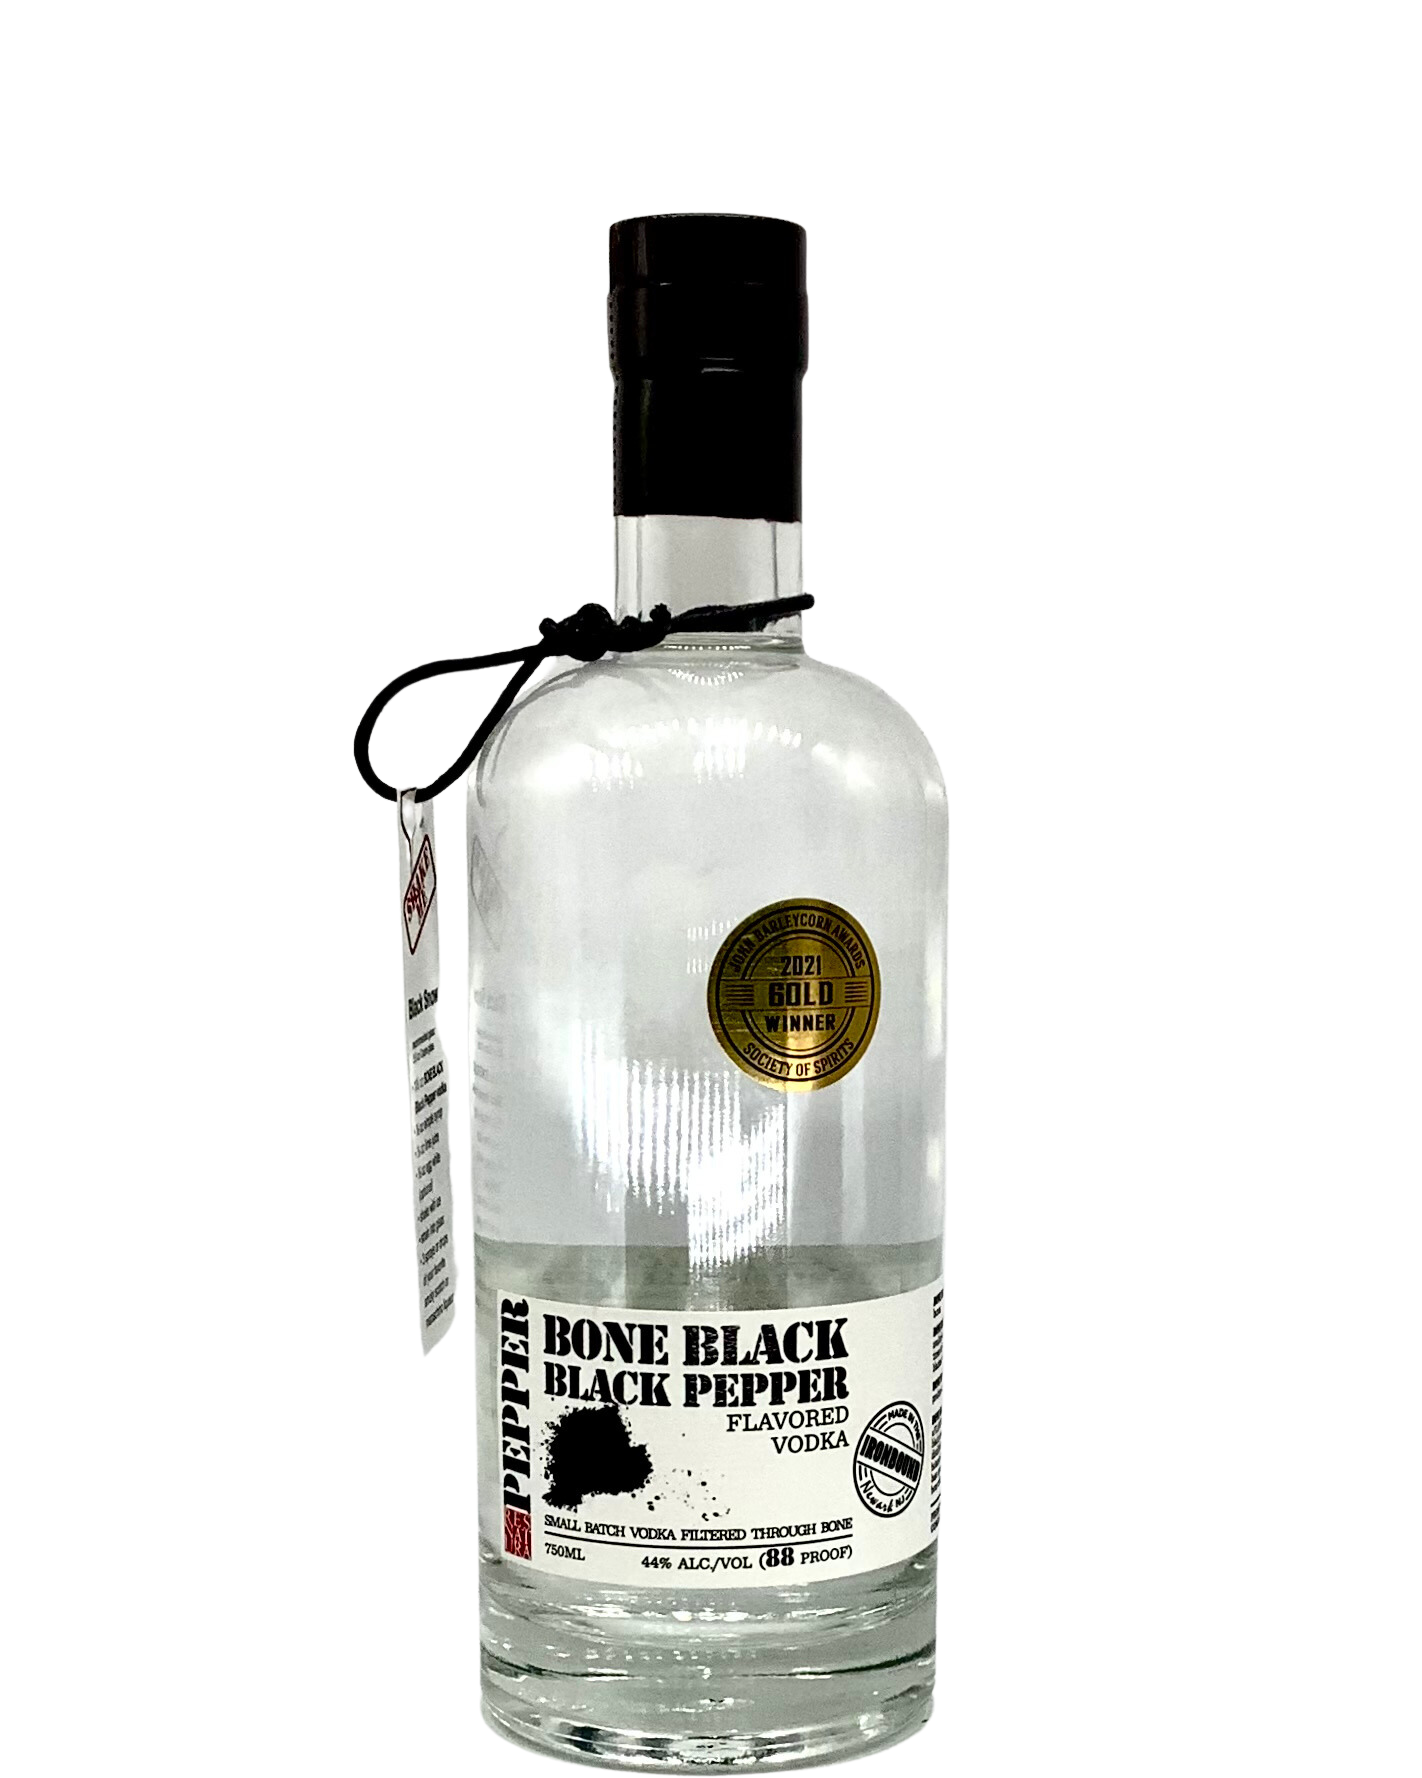 All Points West Distillery BONE BLACK Black Pepper Small Batch Vodka, Newark NJ newarrival